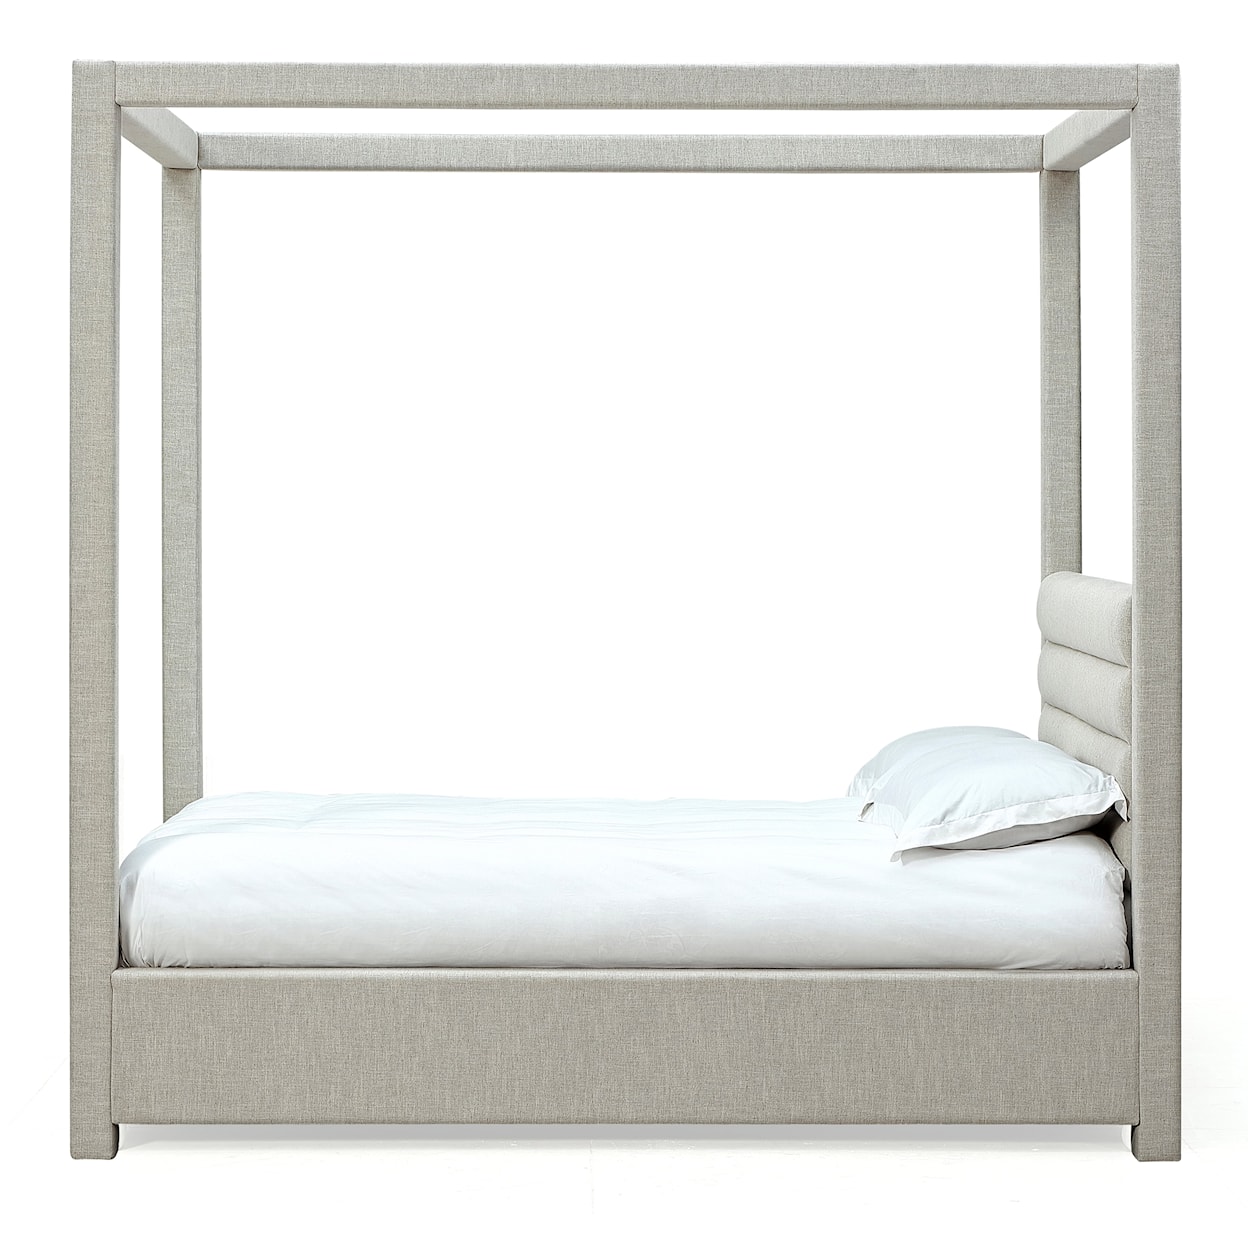 Modus International Rockford King Upholstered Canopy Bed